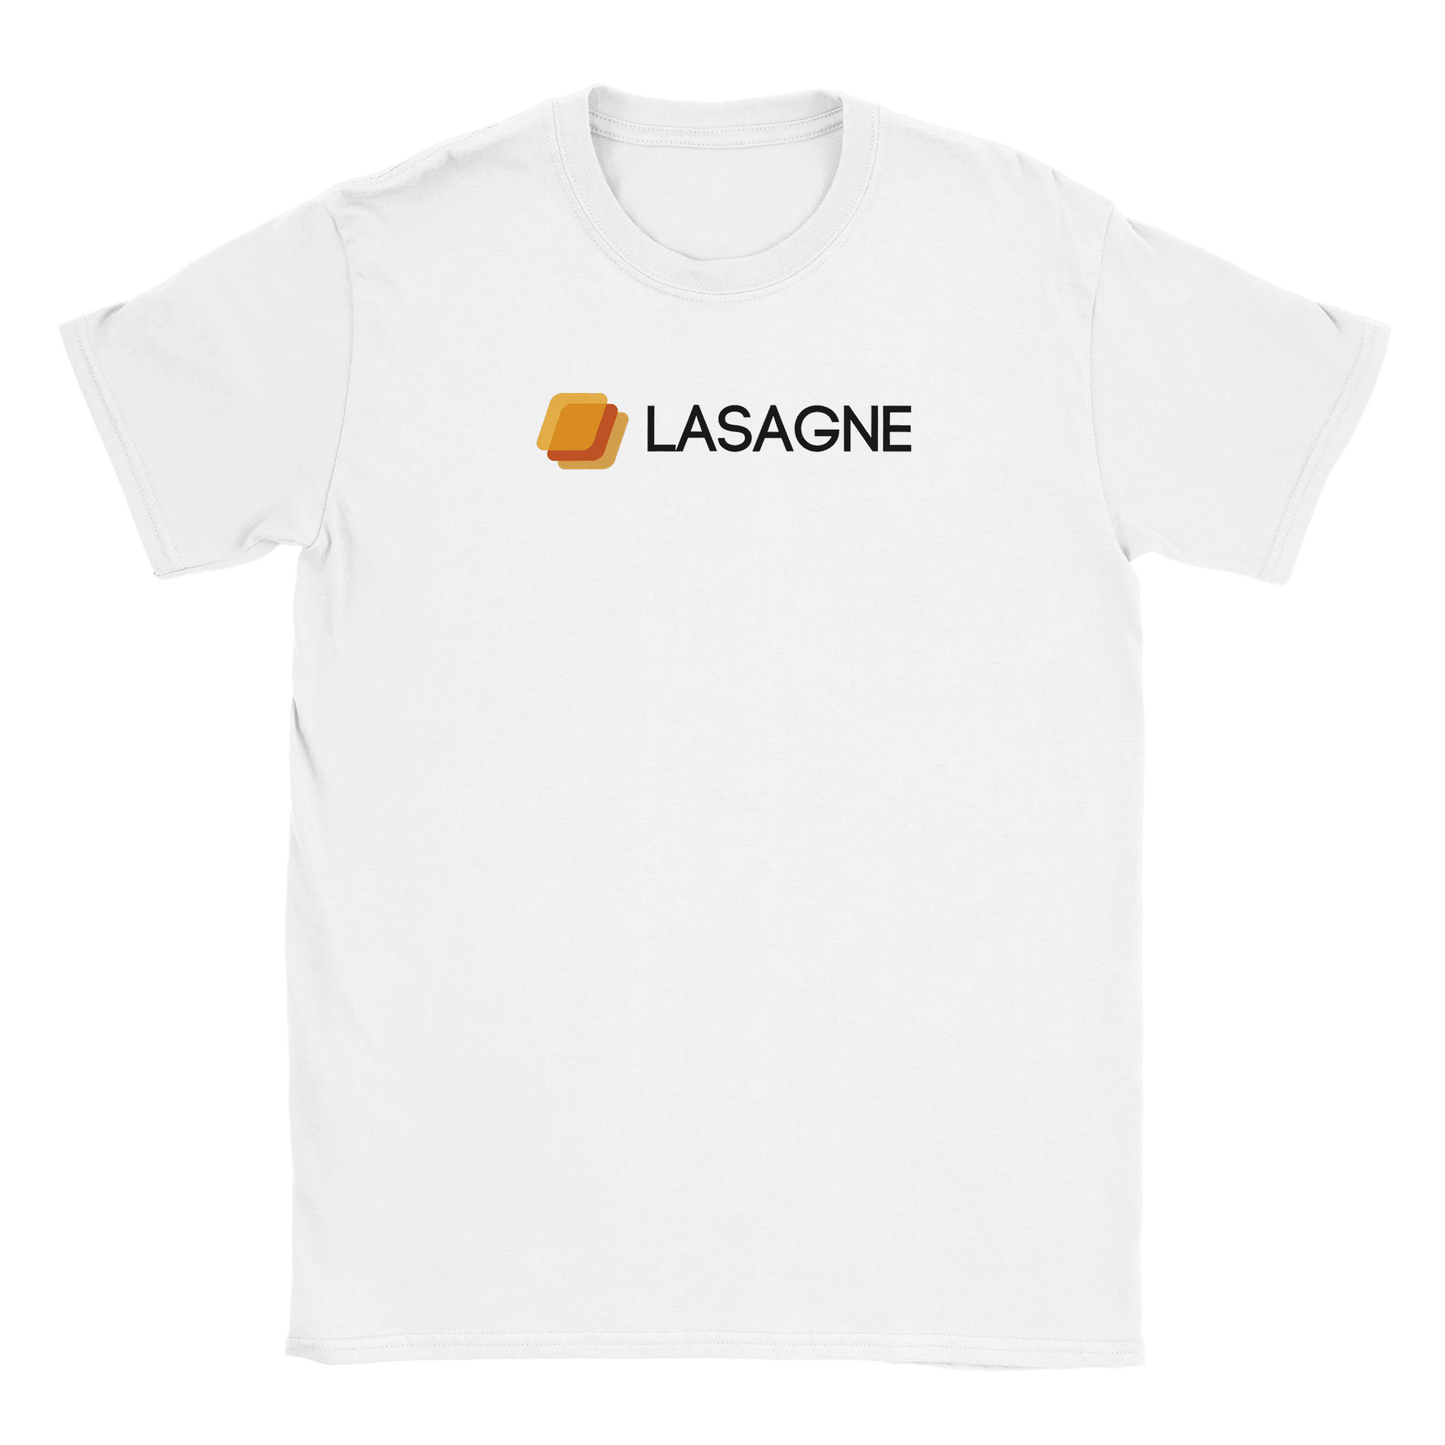 Lasagne - T-shirt Vit